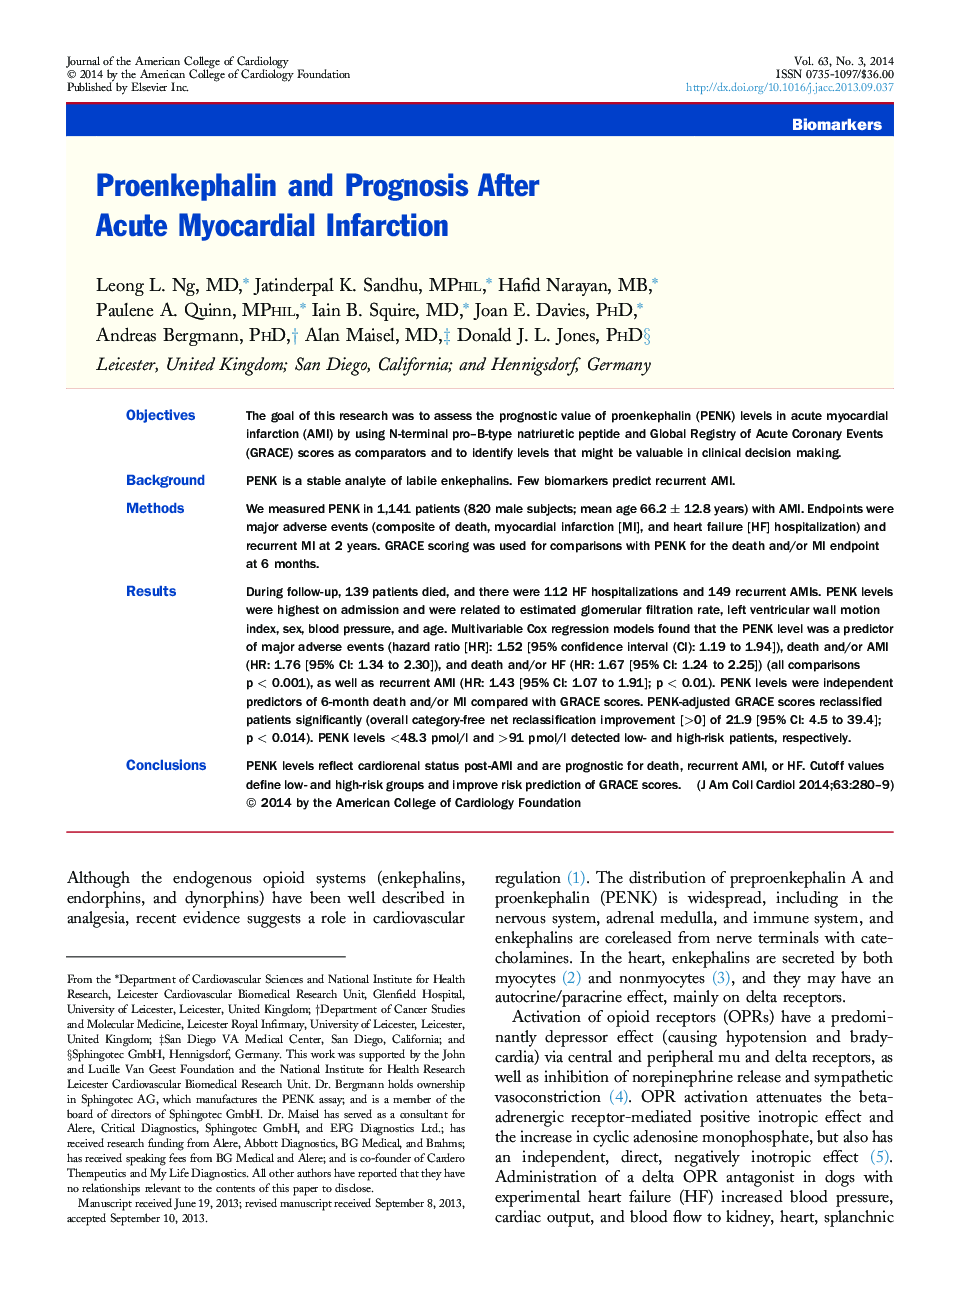 Proenkephalin and Prognosis After Acute Myocardial Infarction 